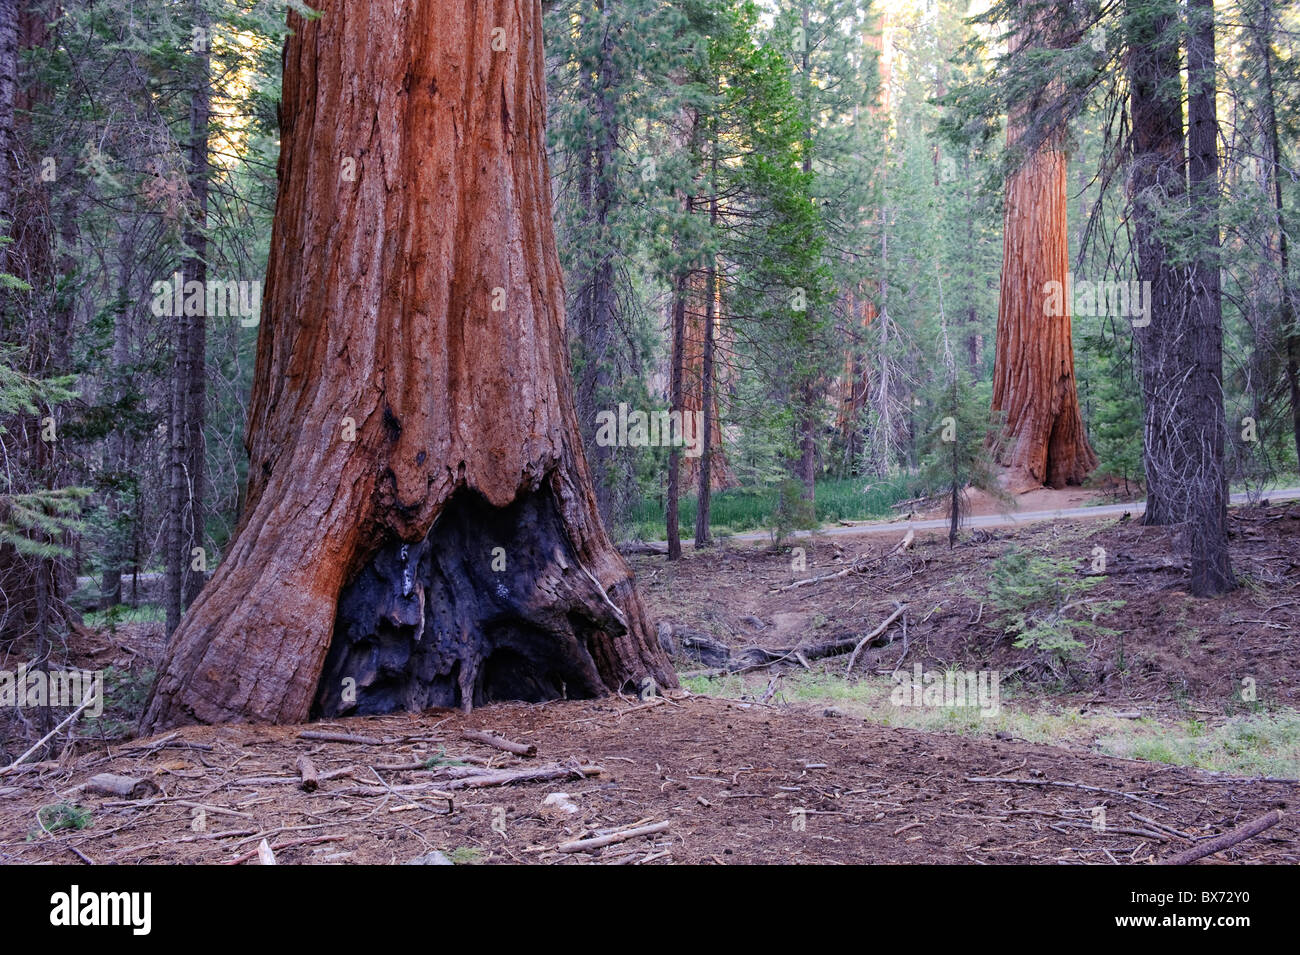 USA, California, Yosemite National Park, Mariposa Grove, Giant Sequoias Stock Photo